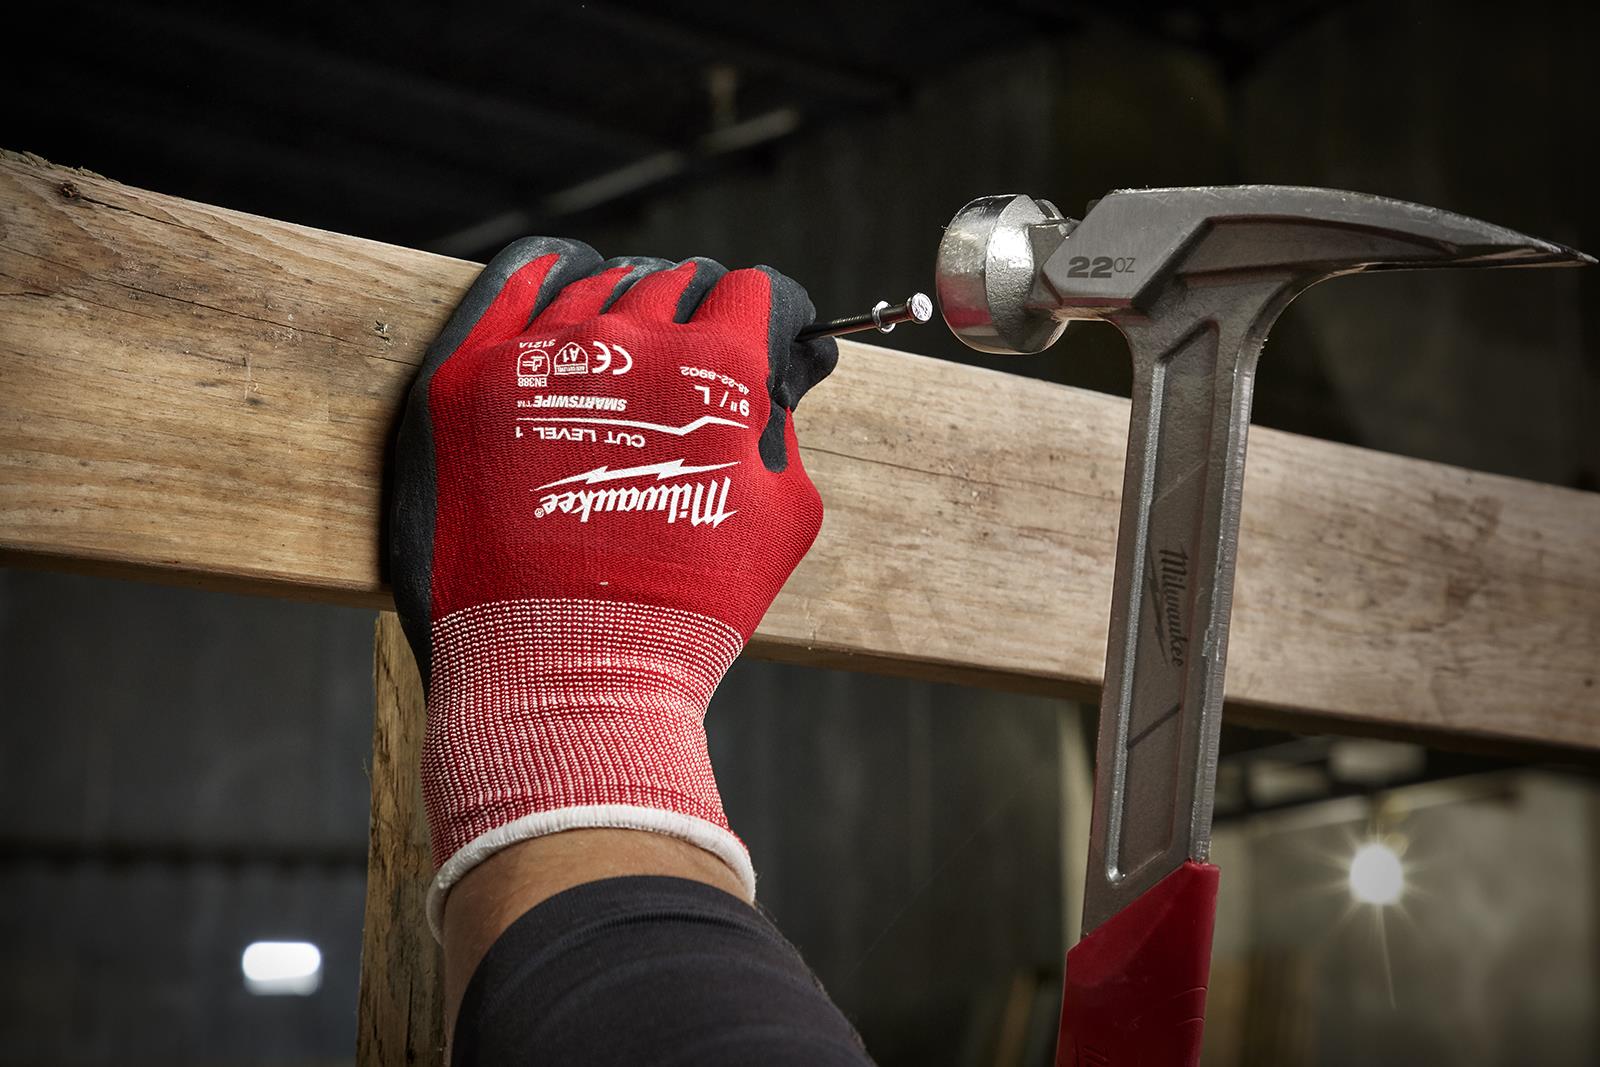 Milwaukee Safety Gloves Cut Level 1/A Dipped Glove Size 8 / M Medium